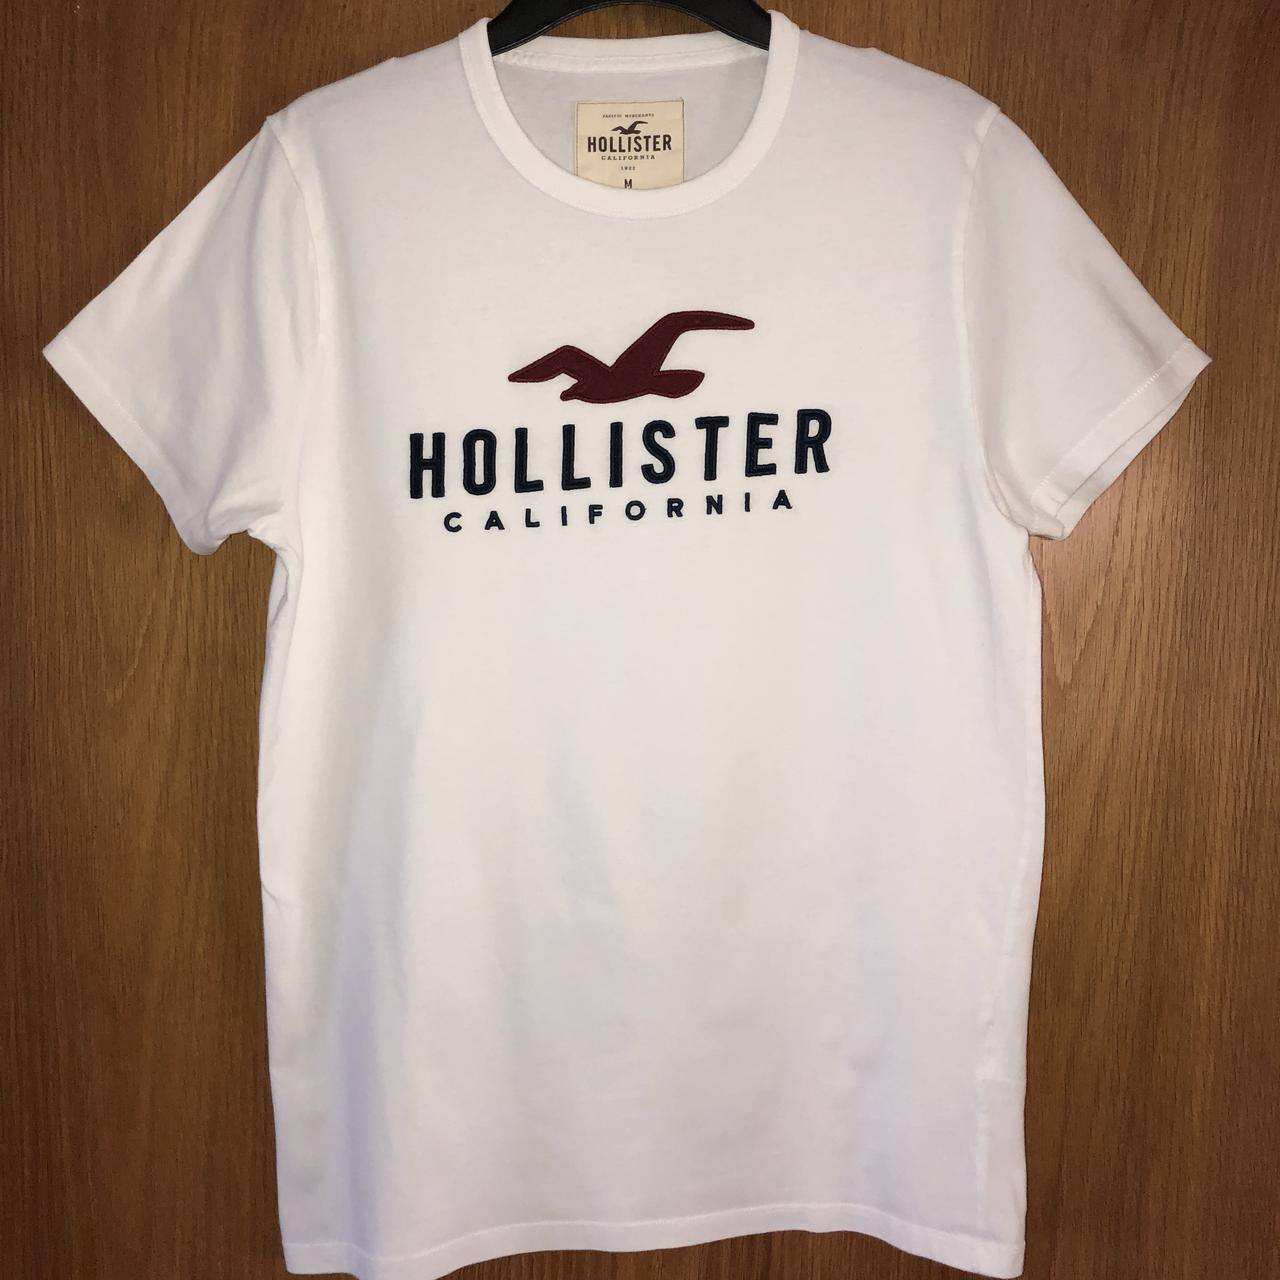 Hollister T shirt., White Hollister California T